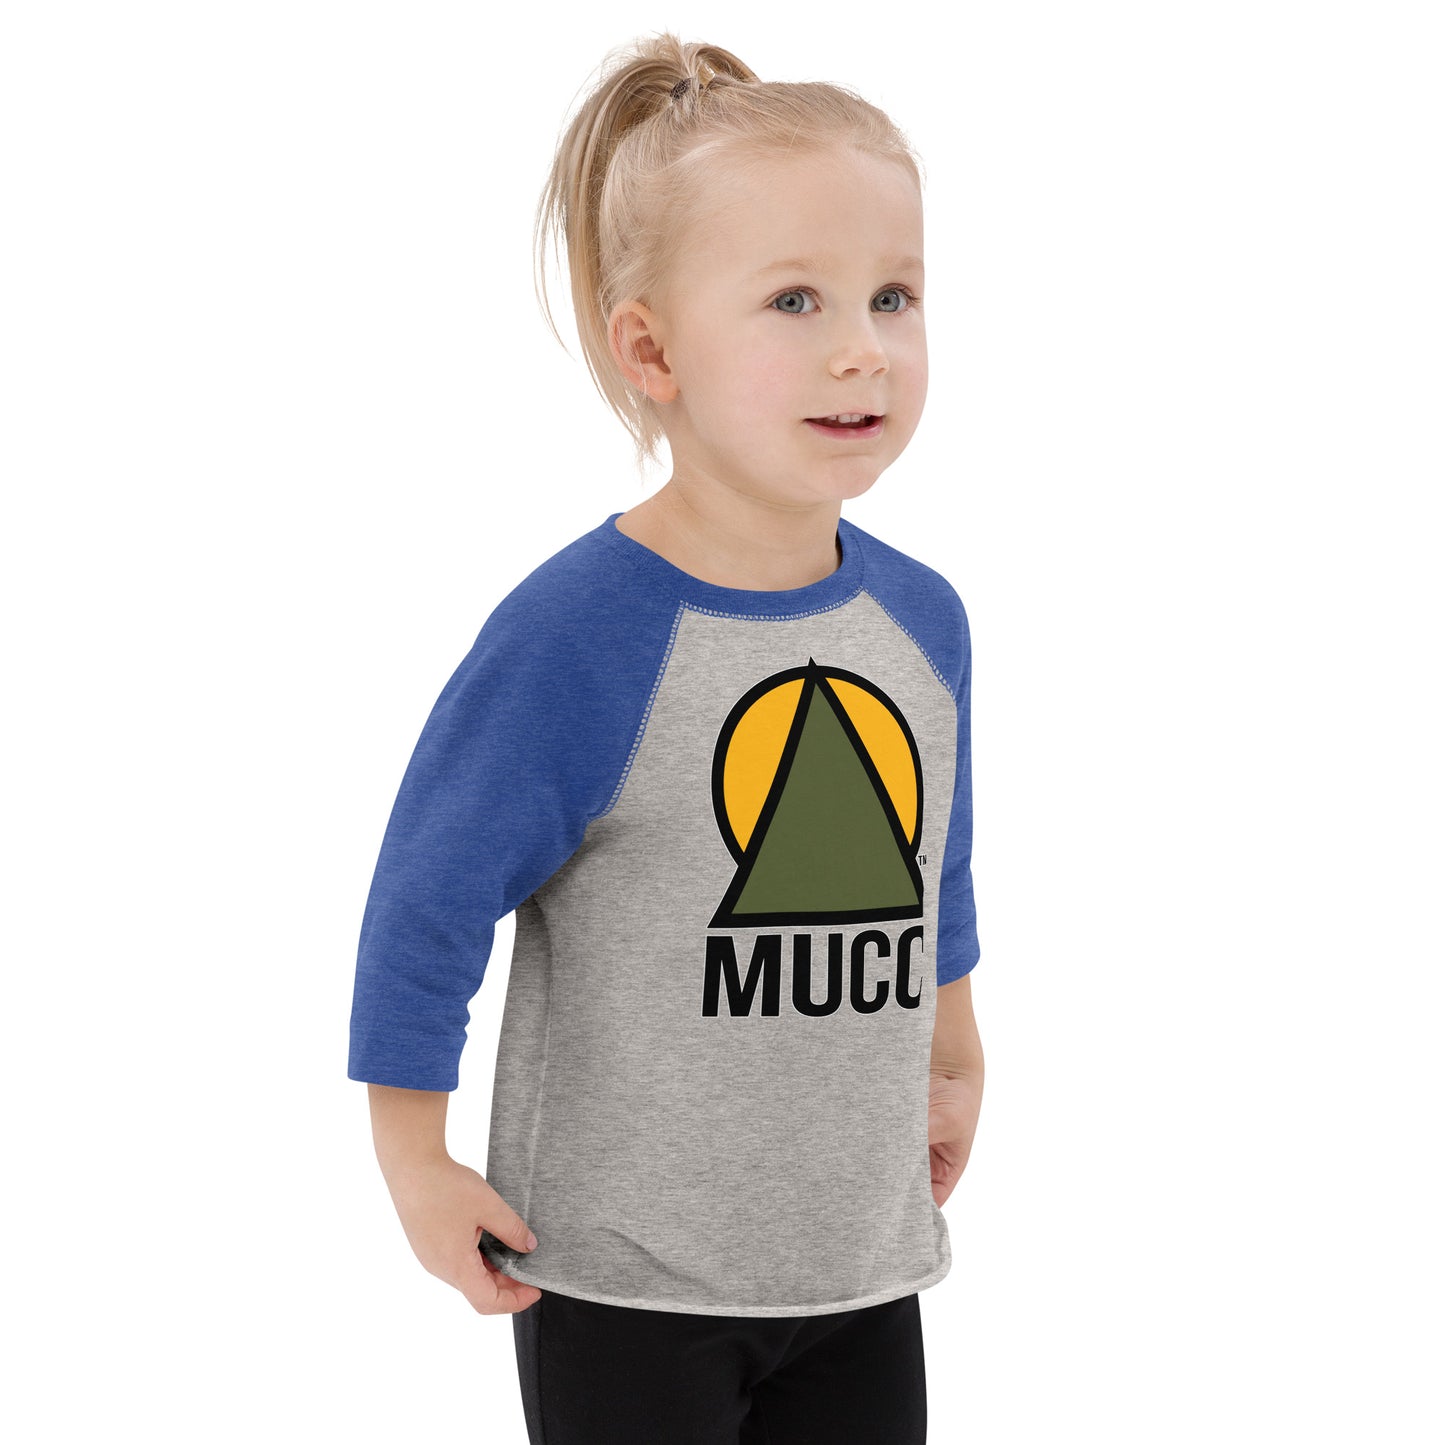 Toddler MUCC Baseball shirt